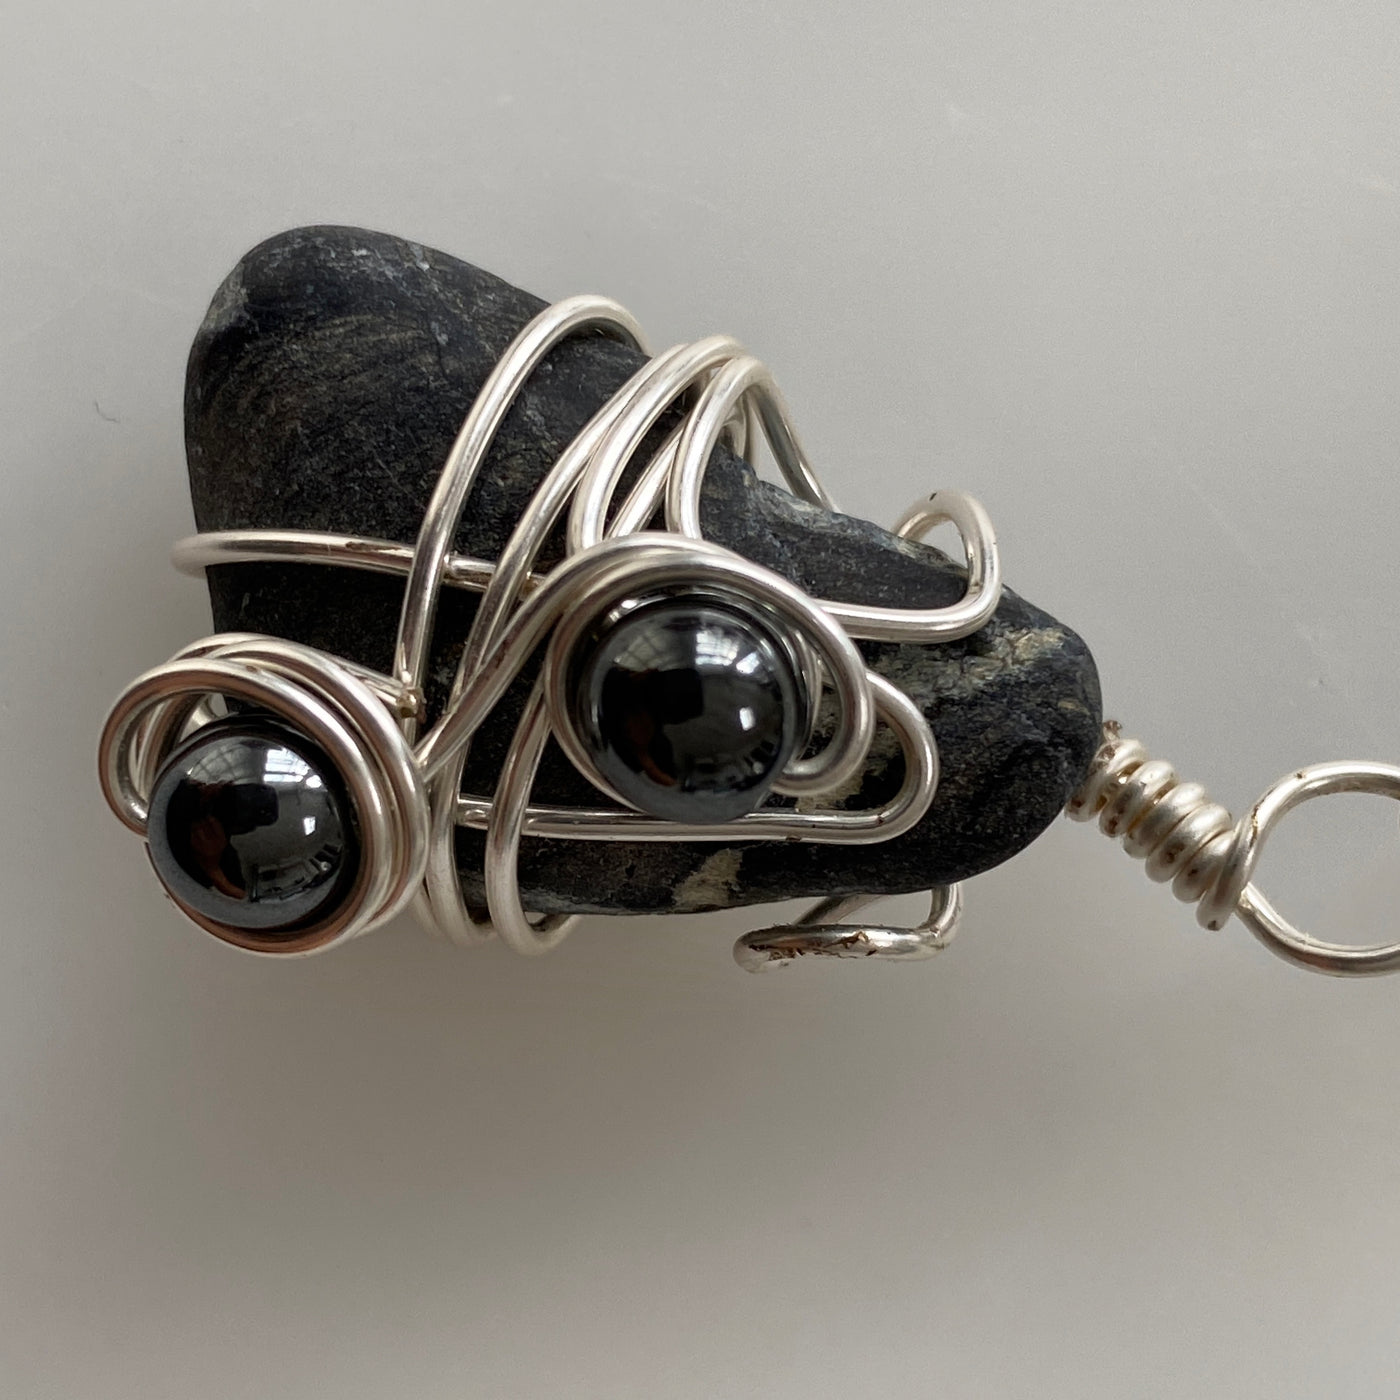 Small pendant with black natural stone, hematite and silver wire. Elbastones.